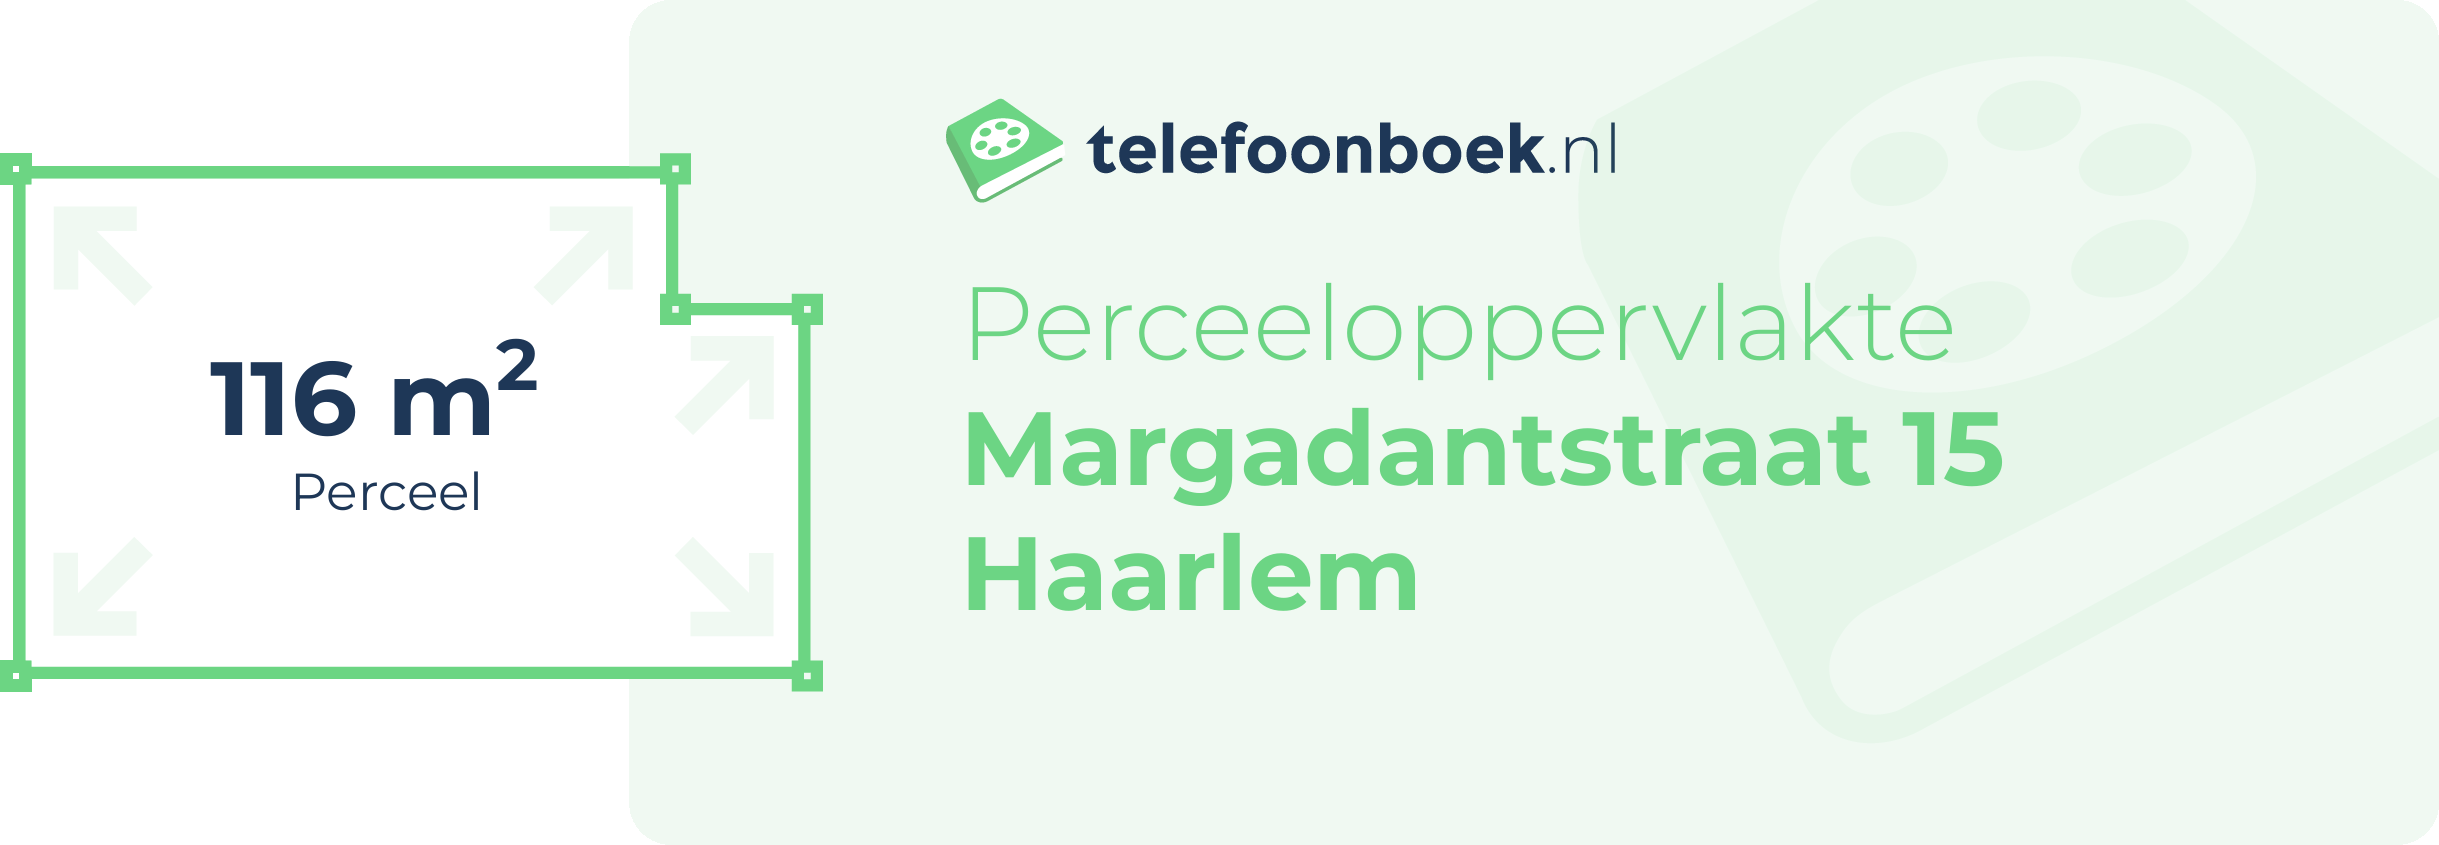 Perceeloppervlakte Margadantstraat 15 Haarlem